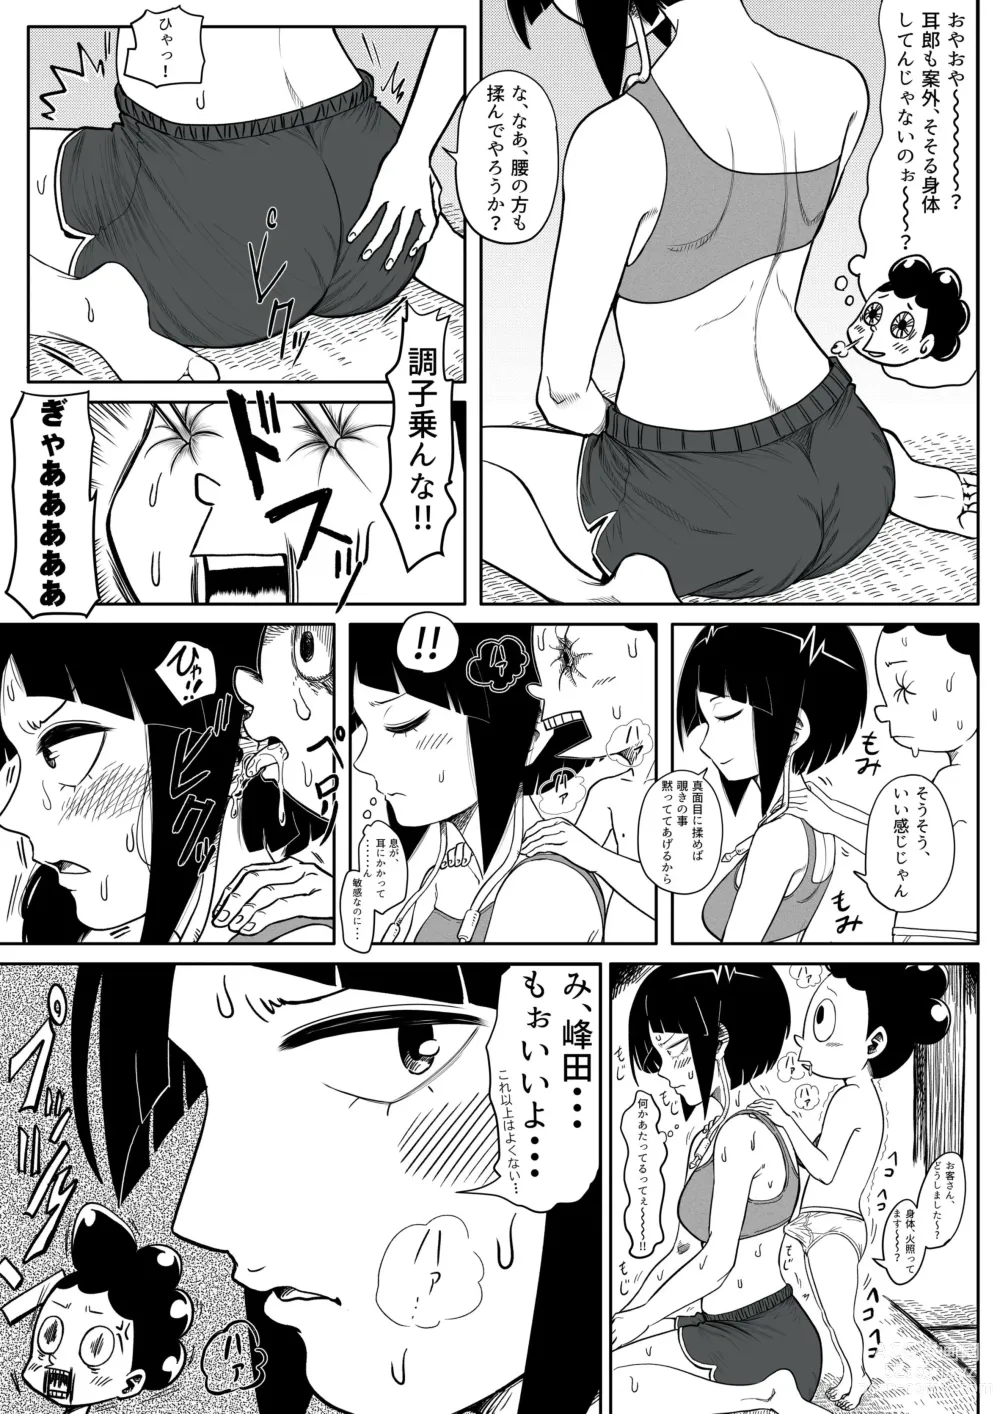 Page 2 of doujinshi Jiro-san vs Mineta-kun